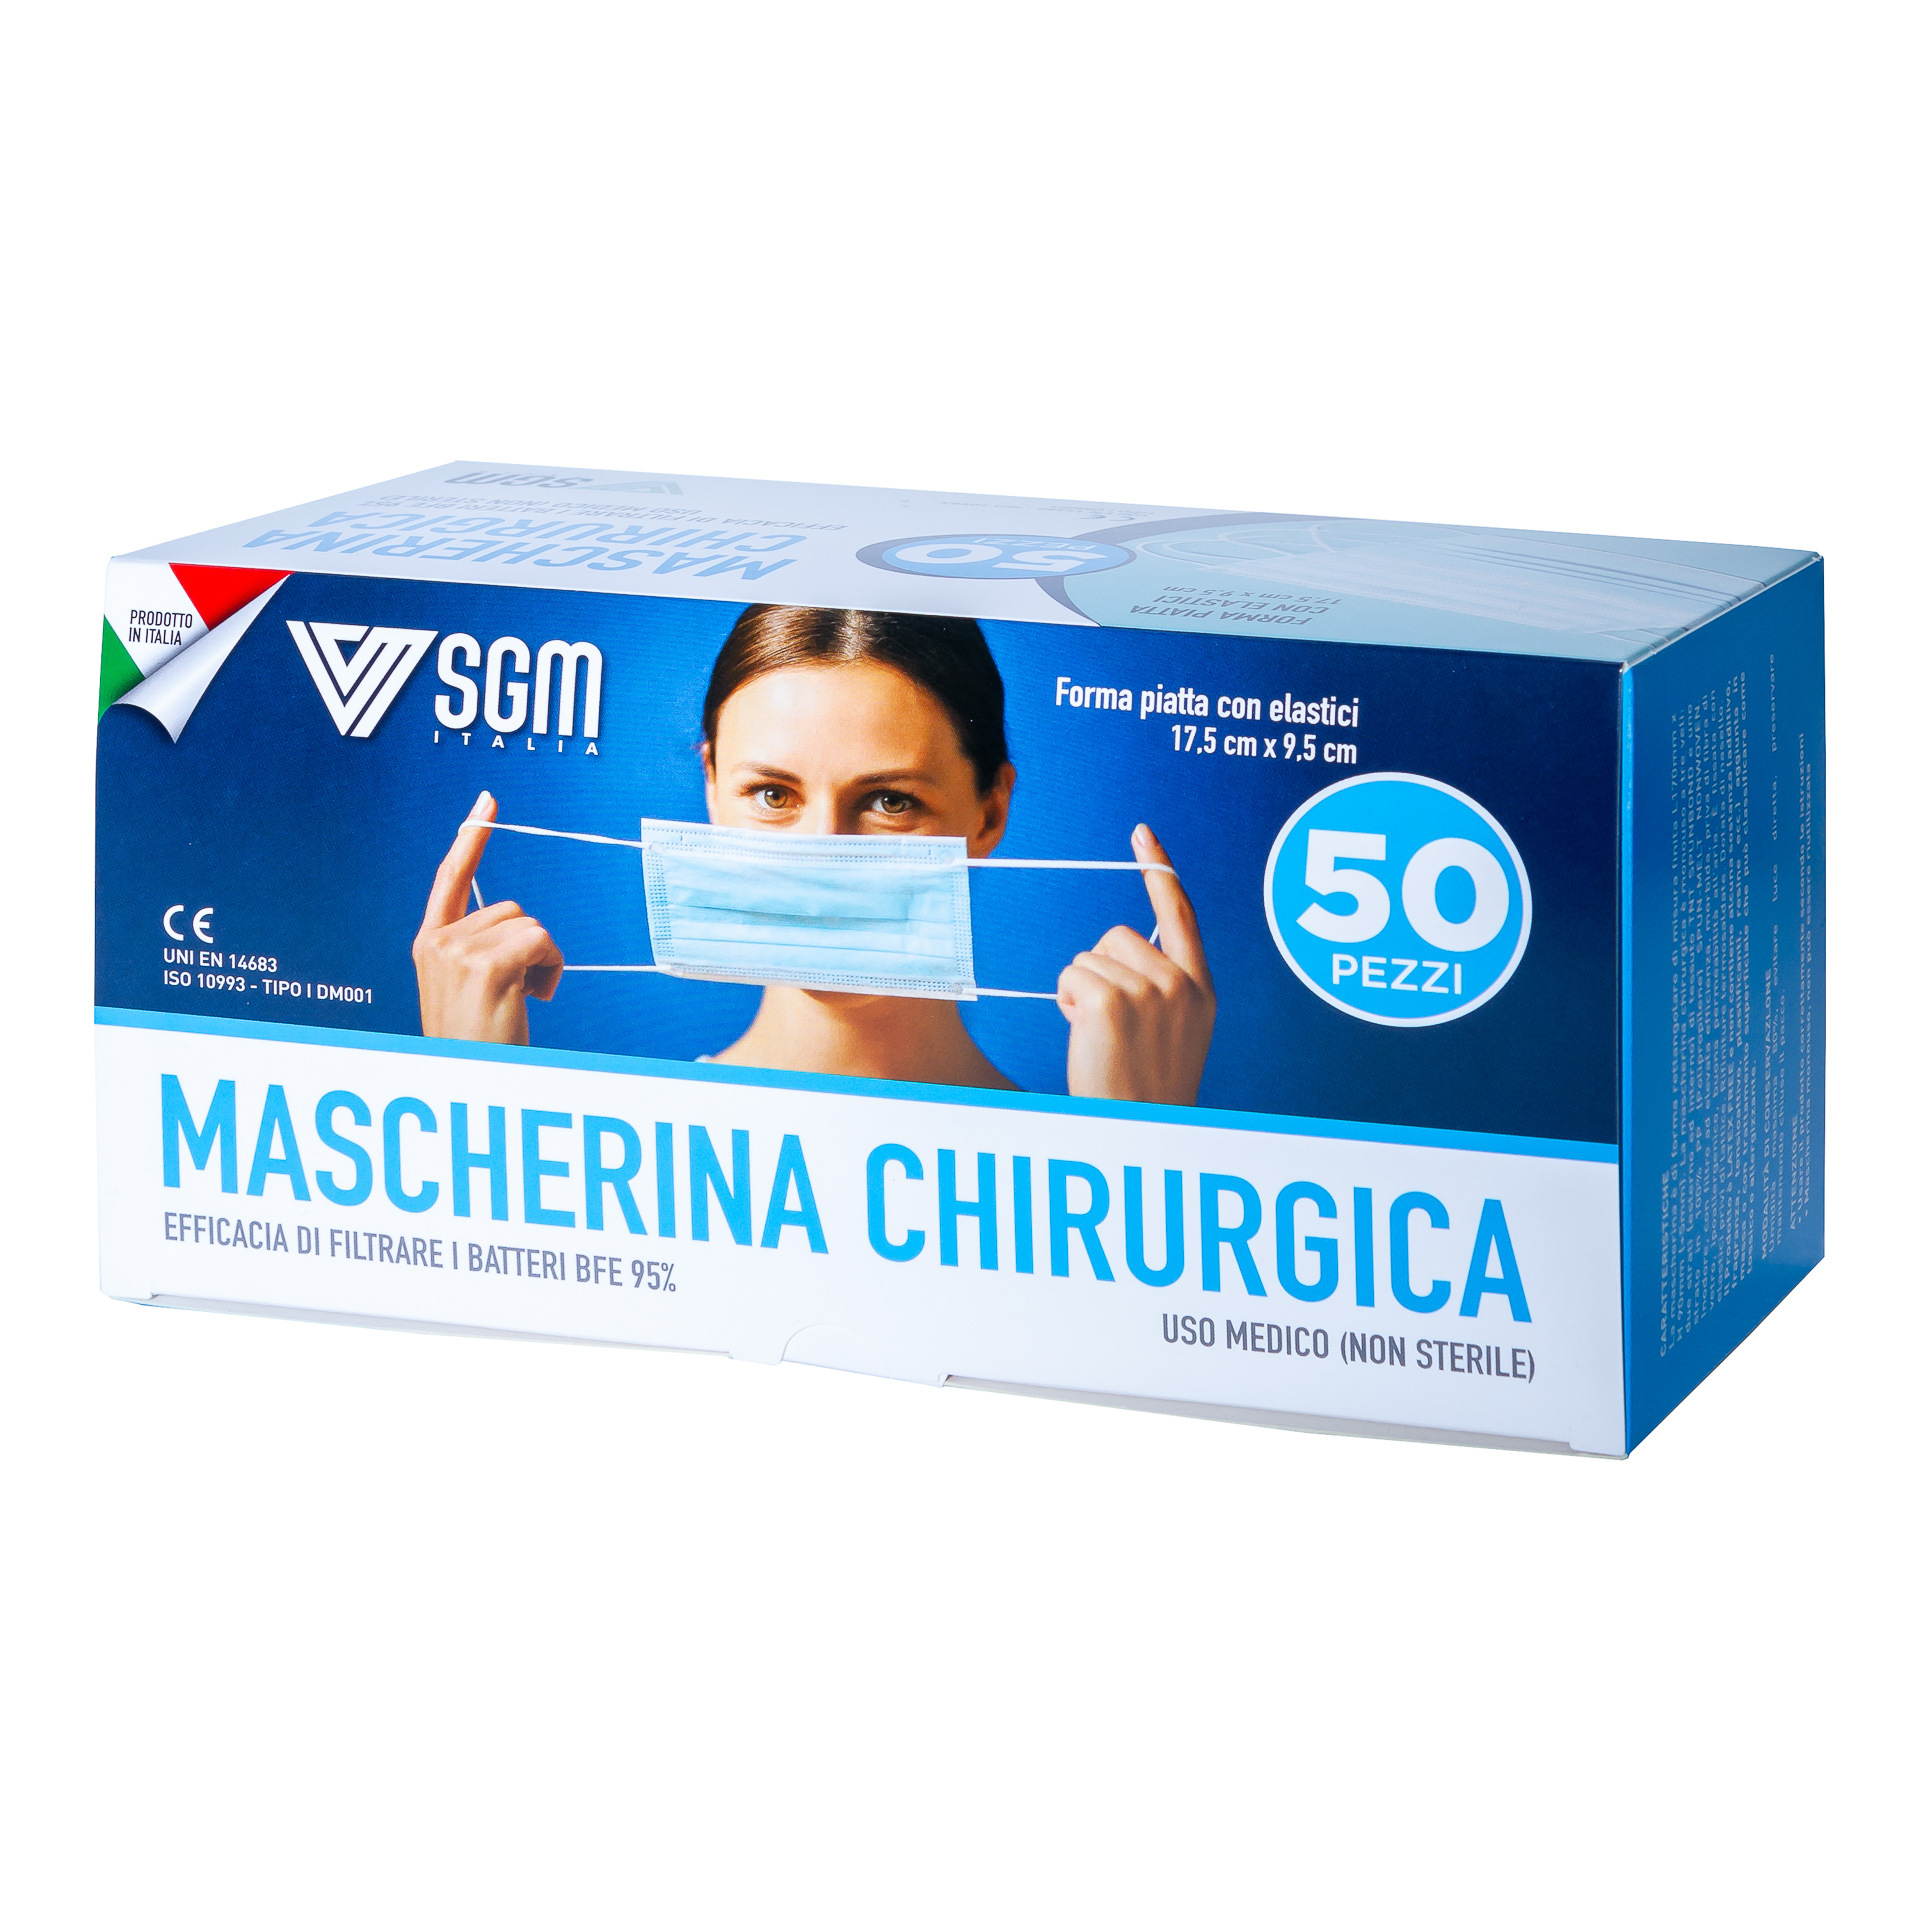 Mascherine Chirurgiche Colorate Italiane IIR - 50 pz.